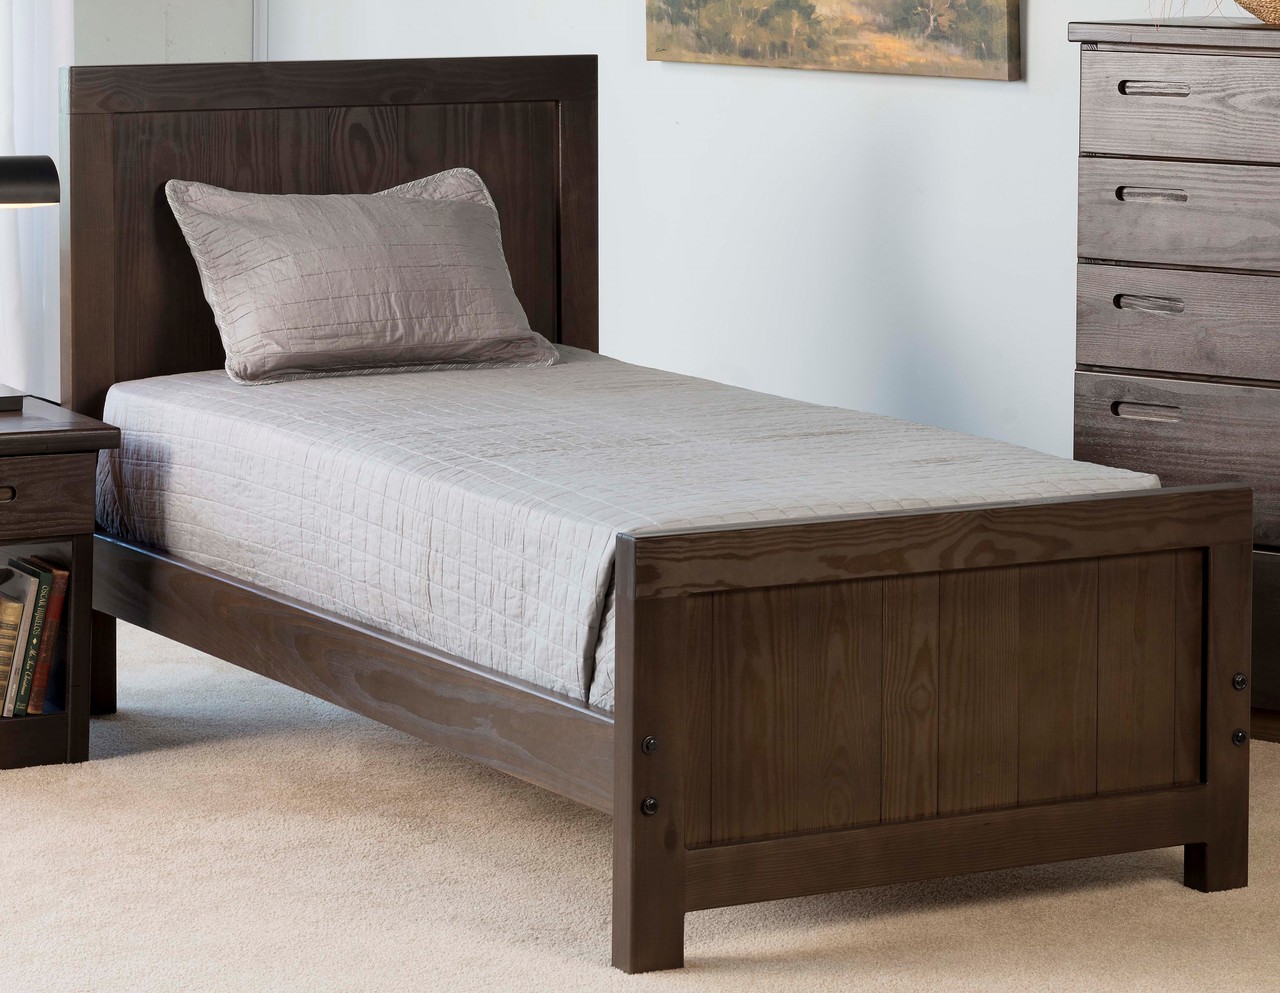 twin xl bed frame and mattress set